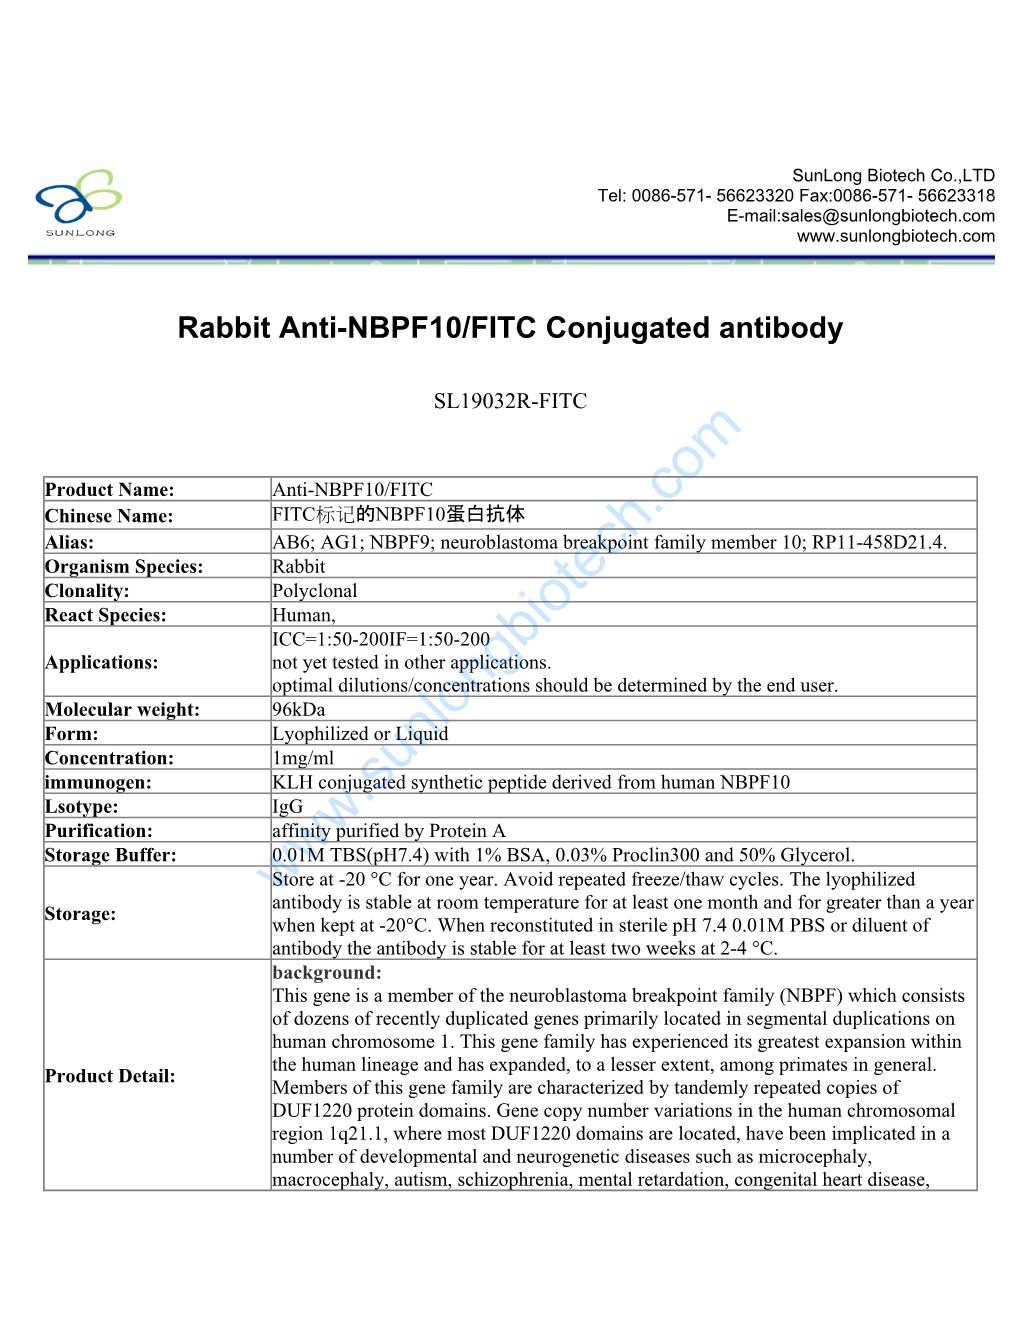 Rabbit Anti-NBPF10/FITC Conjugated Antibody-SL19032R-FITC